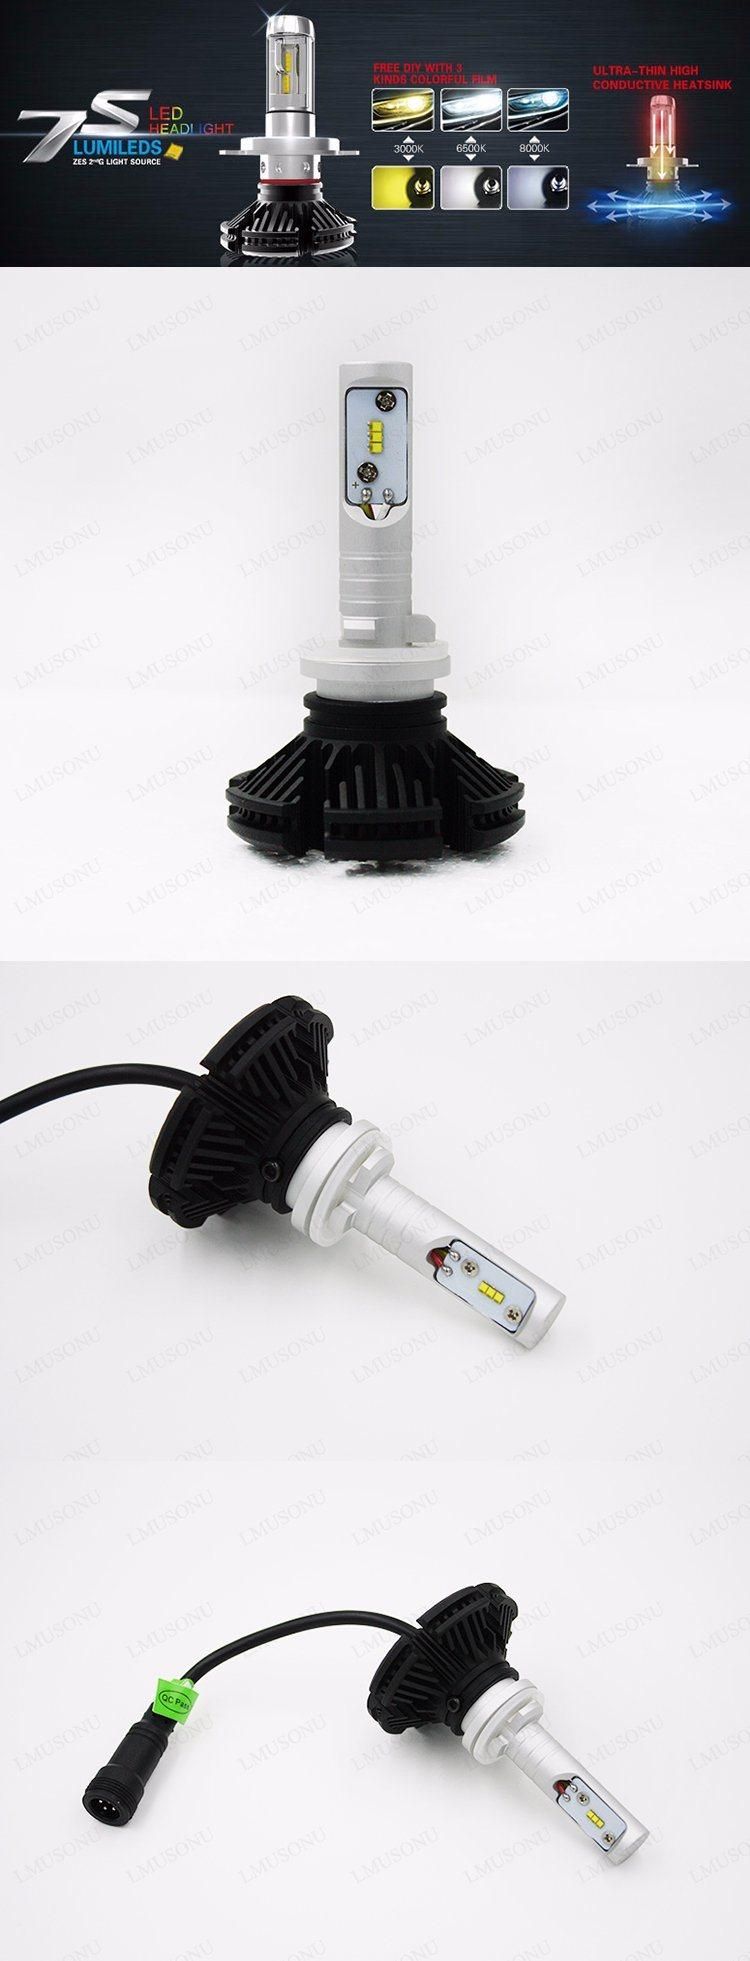 Lmusonu Car 7s 880 LED Headlight 25W 6000lm Waterproof IP67 Fanless Design